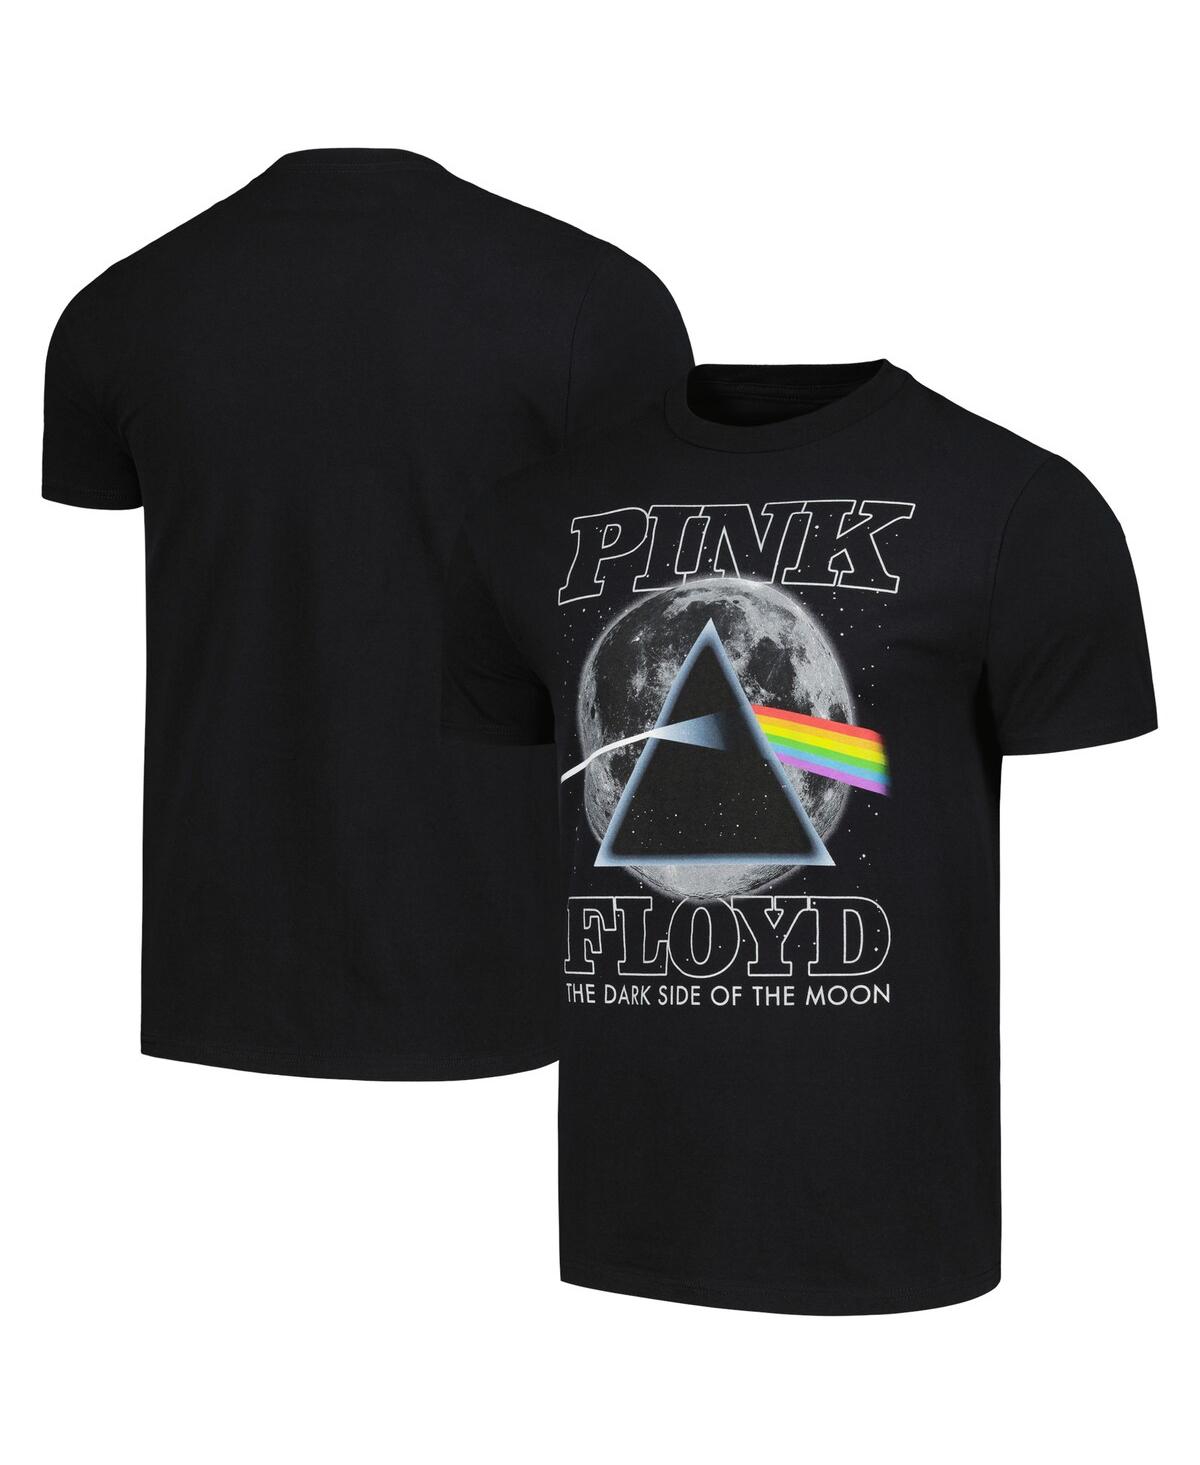 Ripple Junction Men's Black Pink Floyd Graphic T-shirt